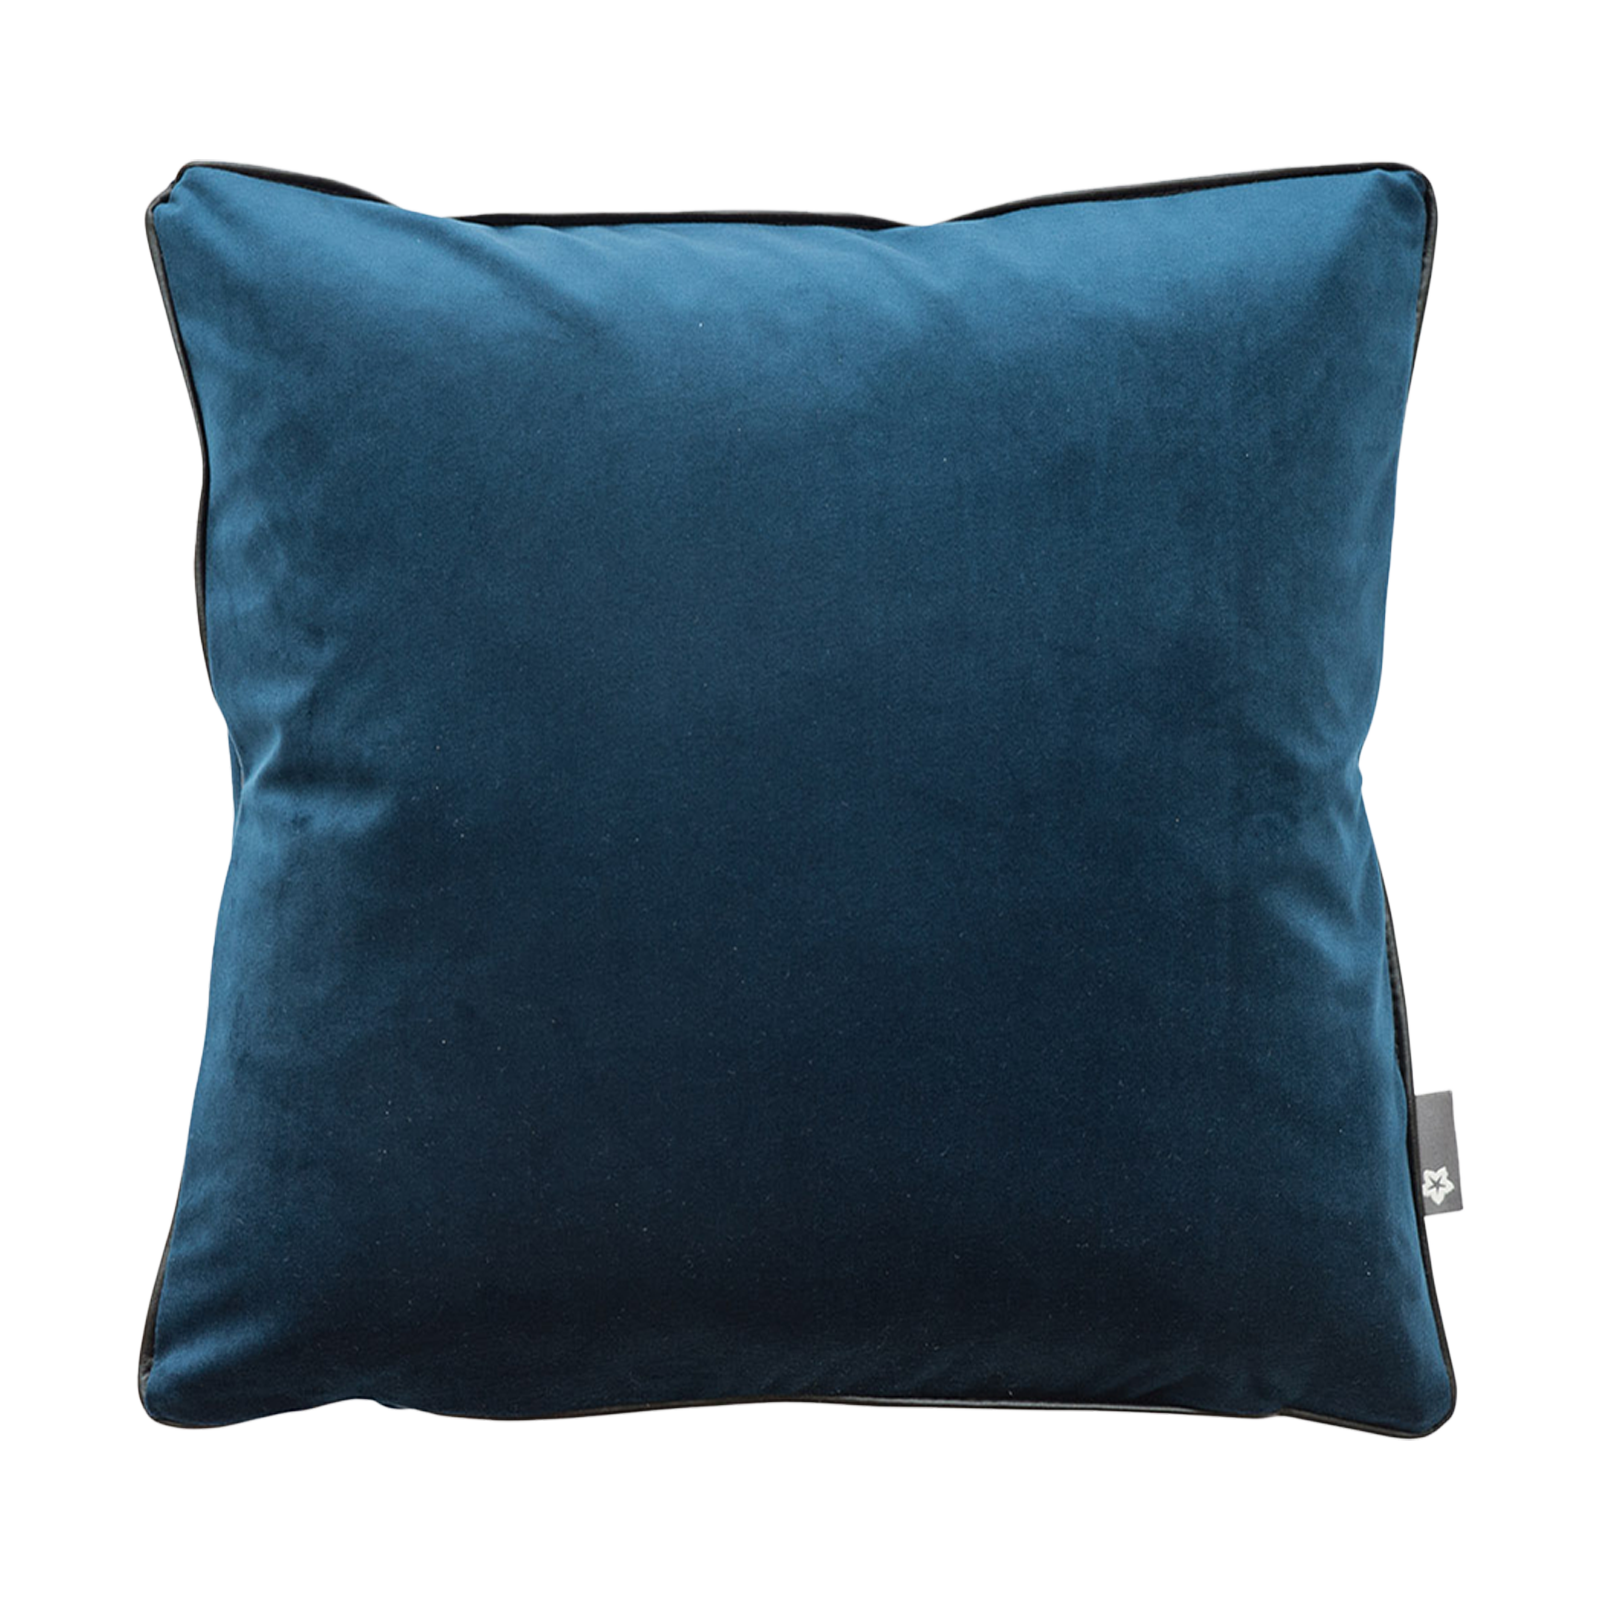 Größe: 41x 41 cm Farbe: nachtblau #farbe_nachtblau